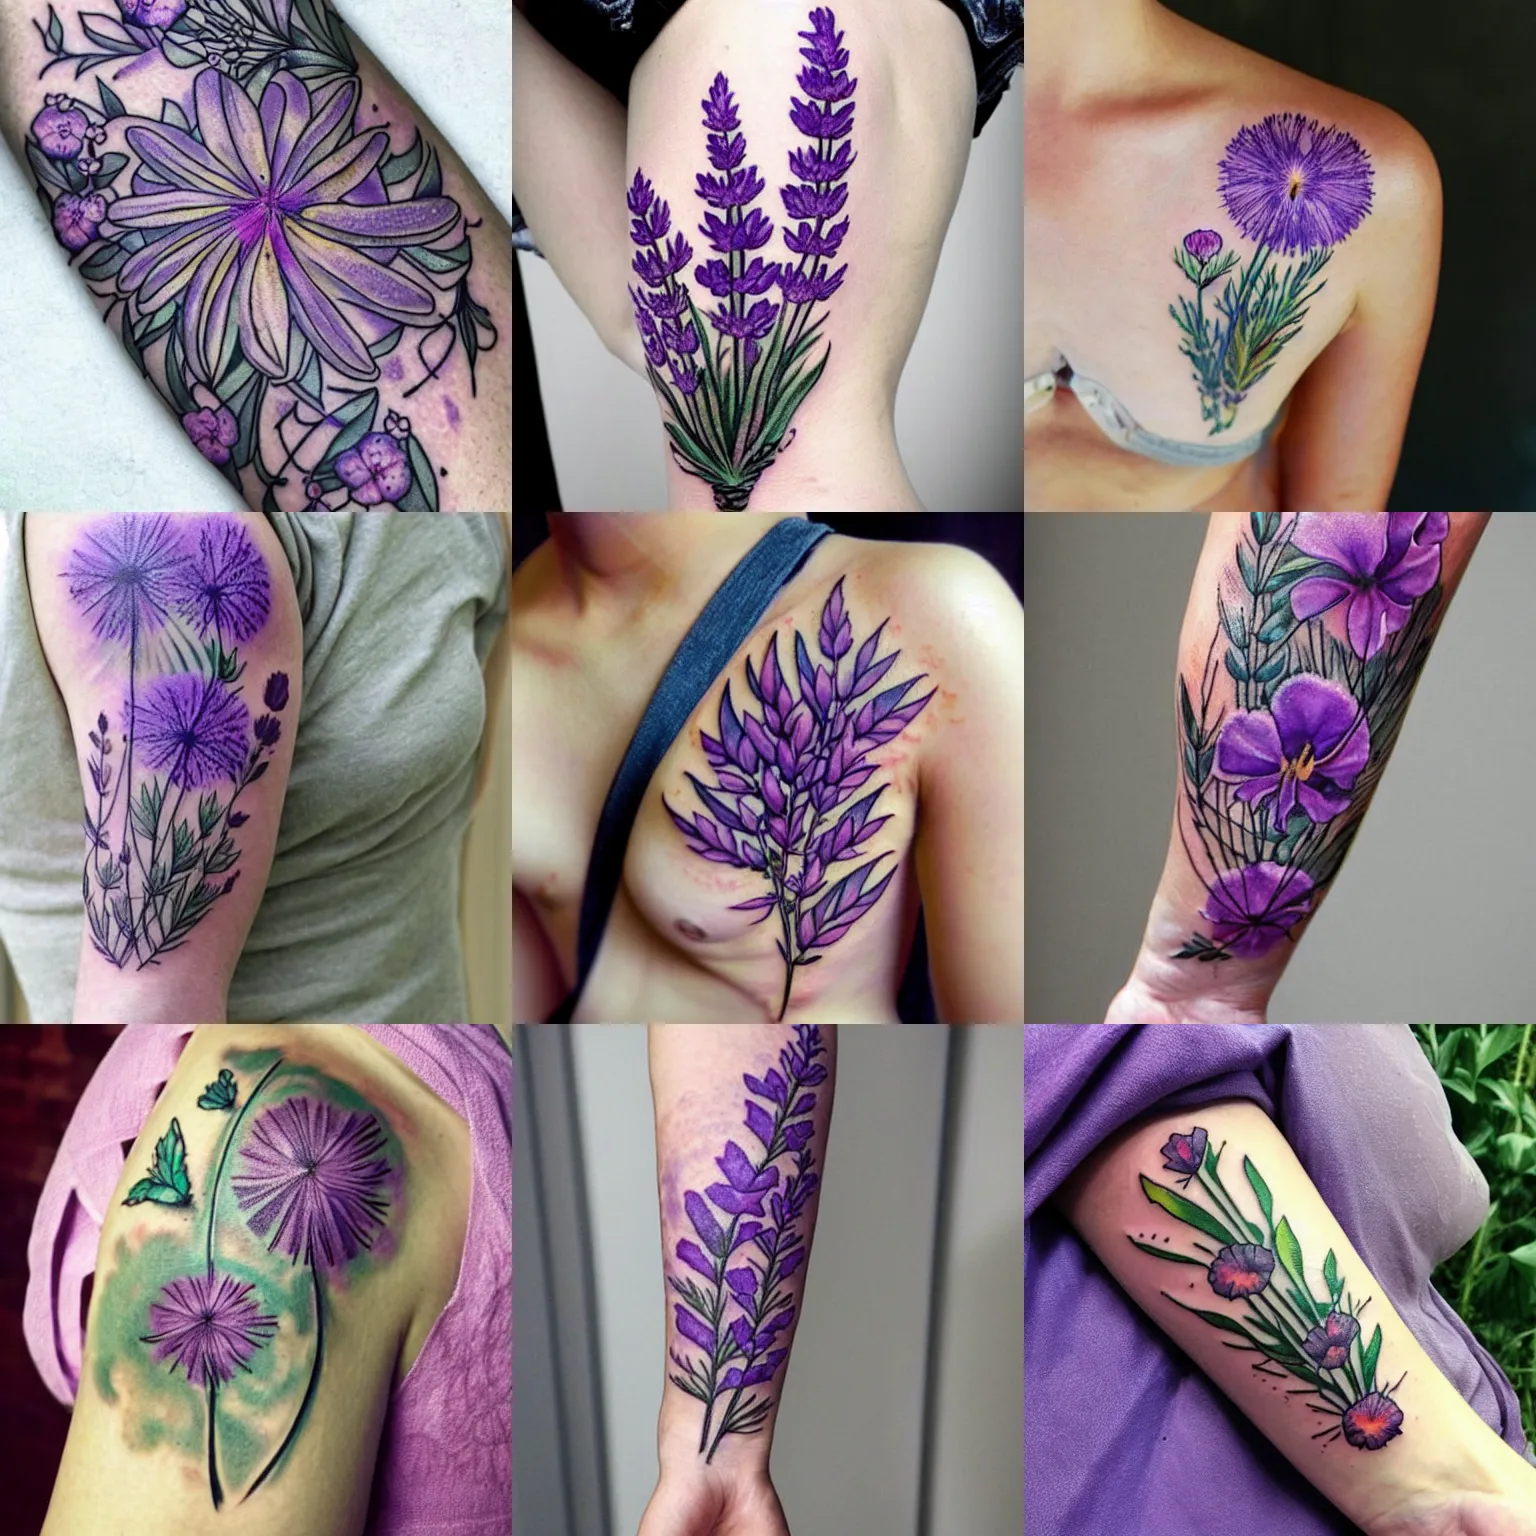 Prompt: botanical tattoo, lavender, verbena, hibiscus, dandelion, tattoo design, inking on skin, sleeve tattoo